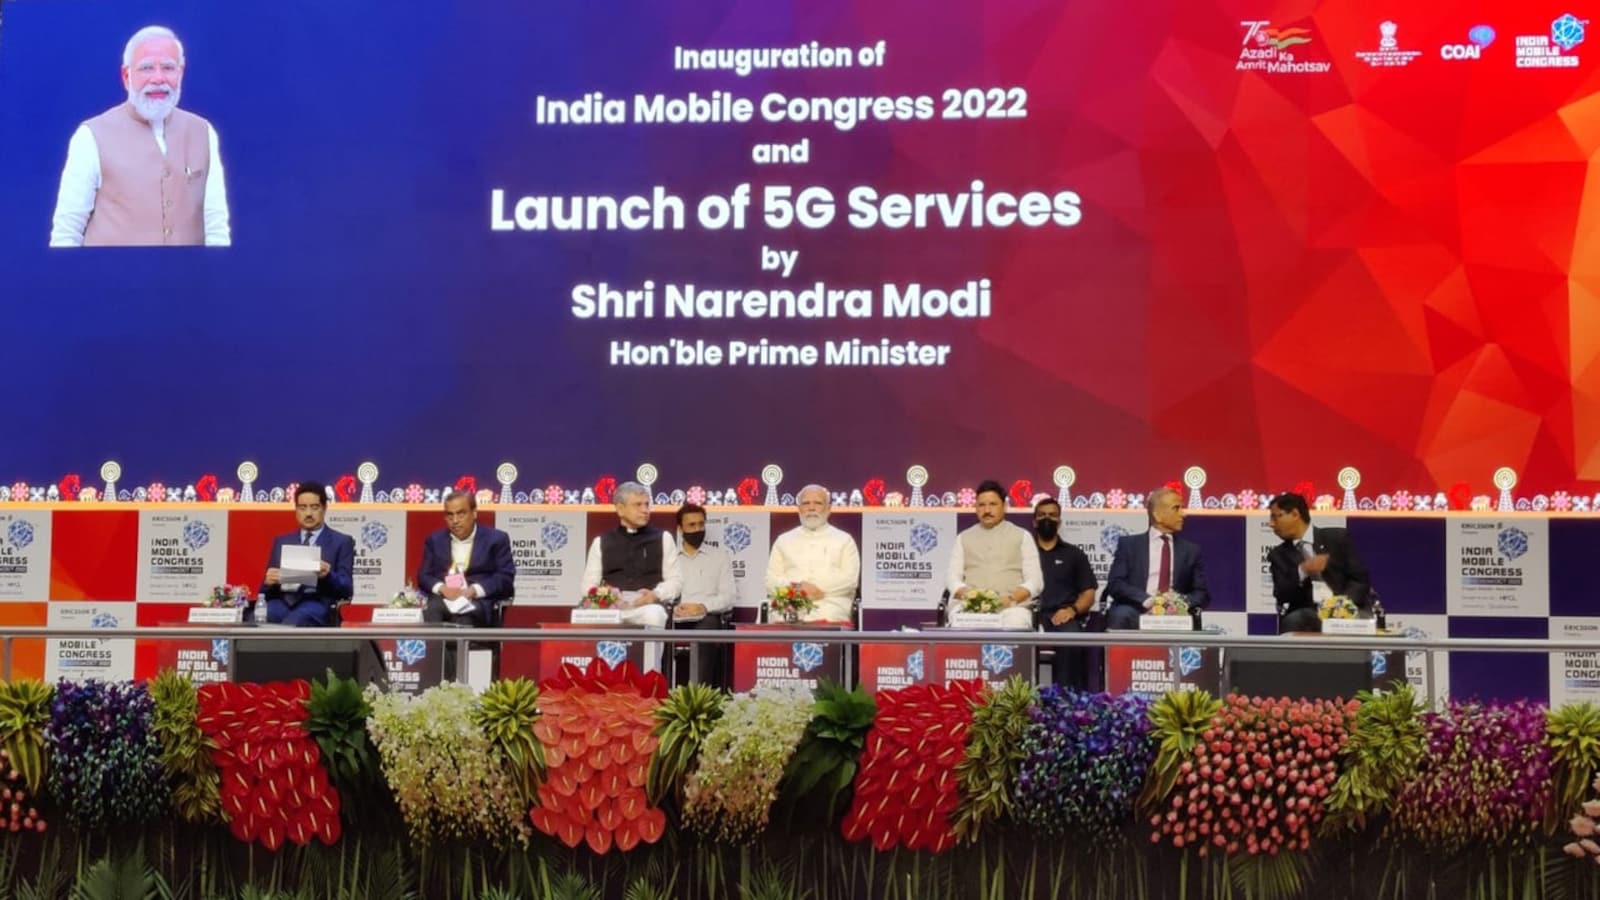 In photos: PM Narendra Modi launches 5G in India